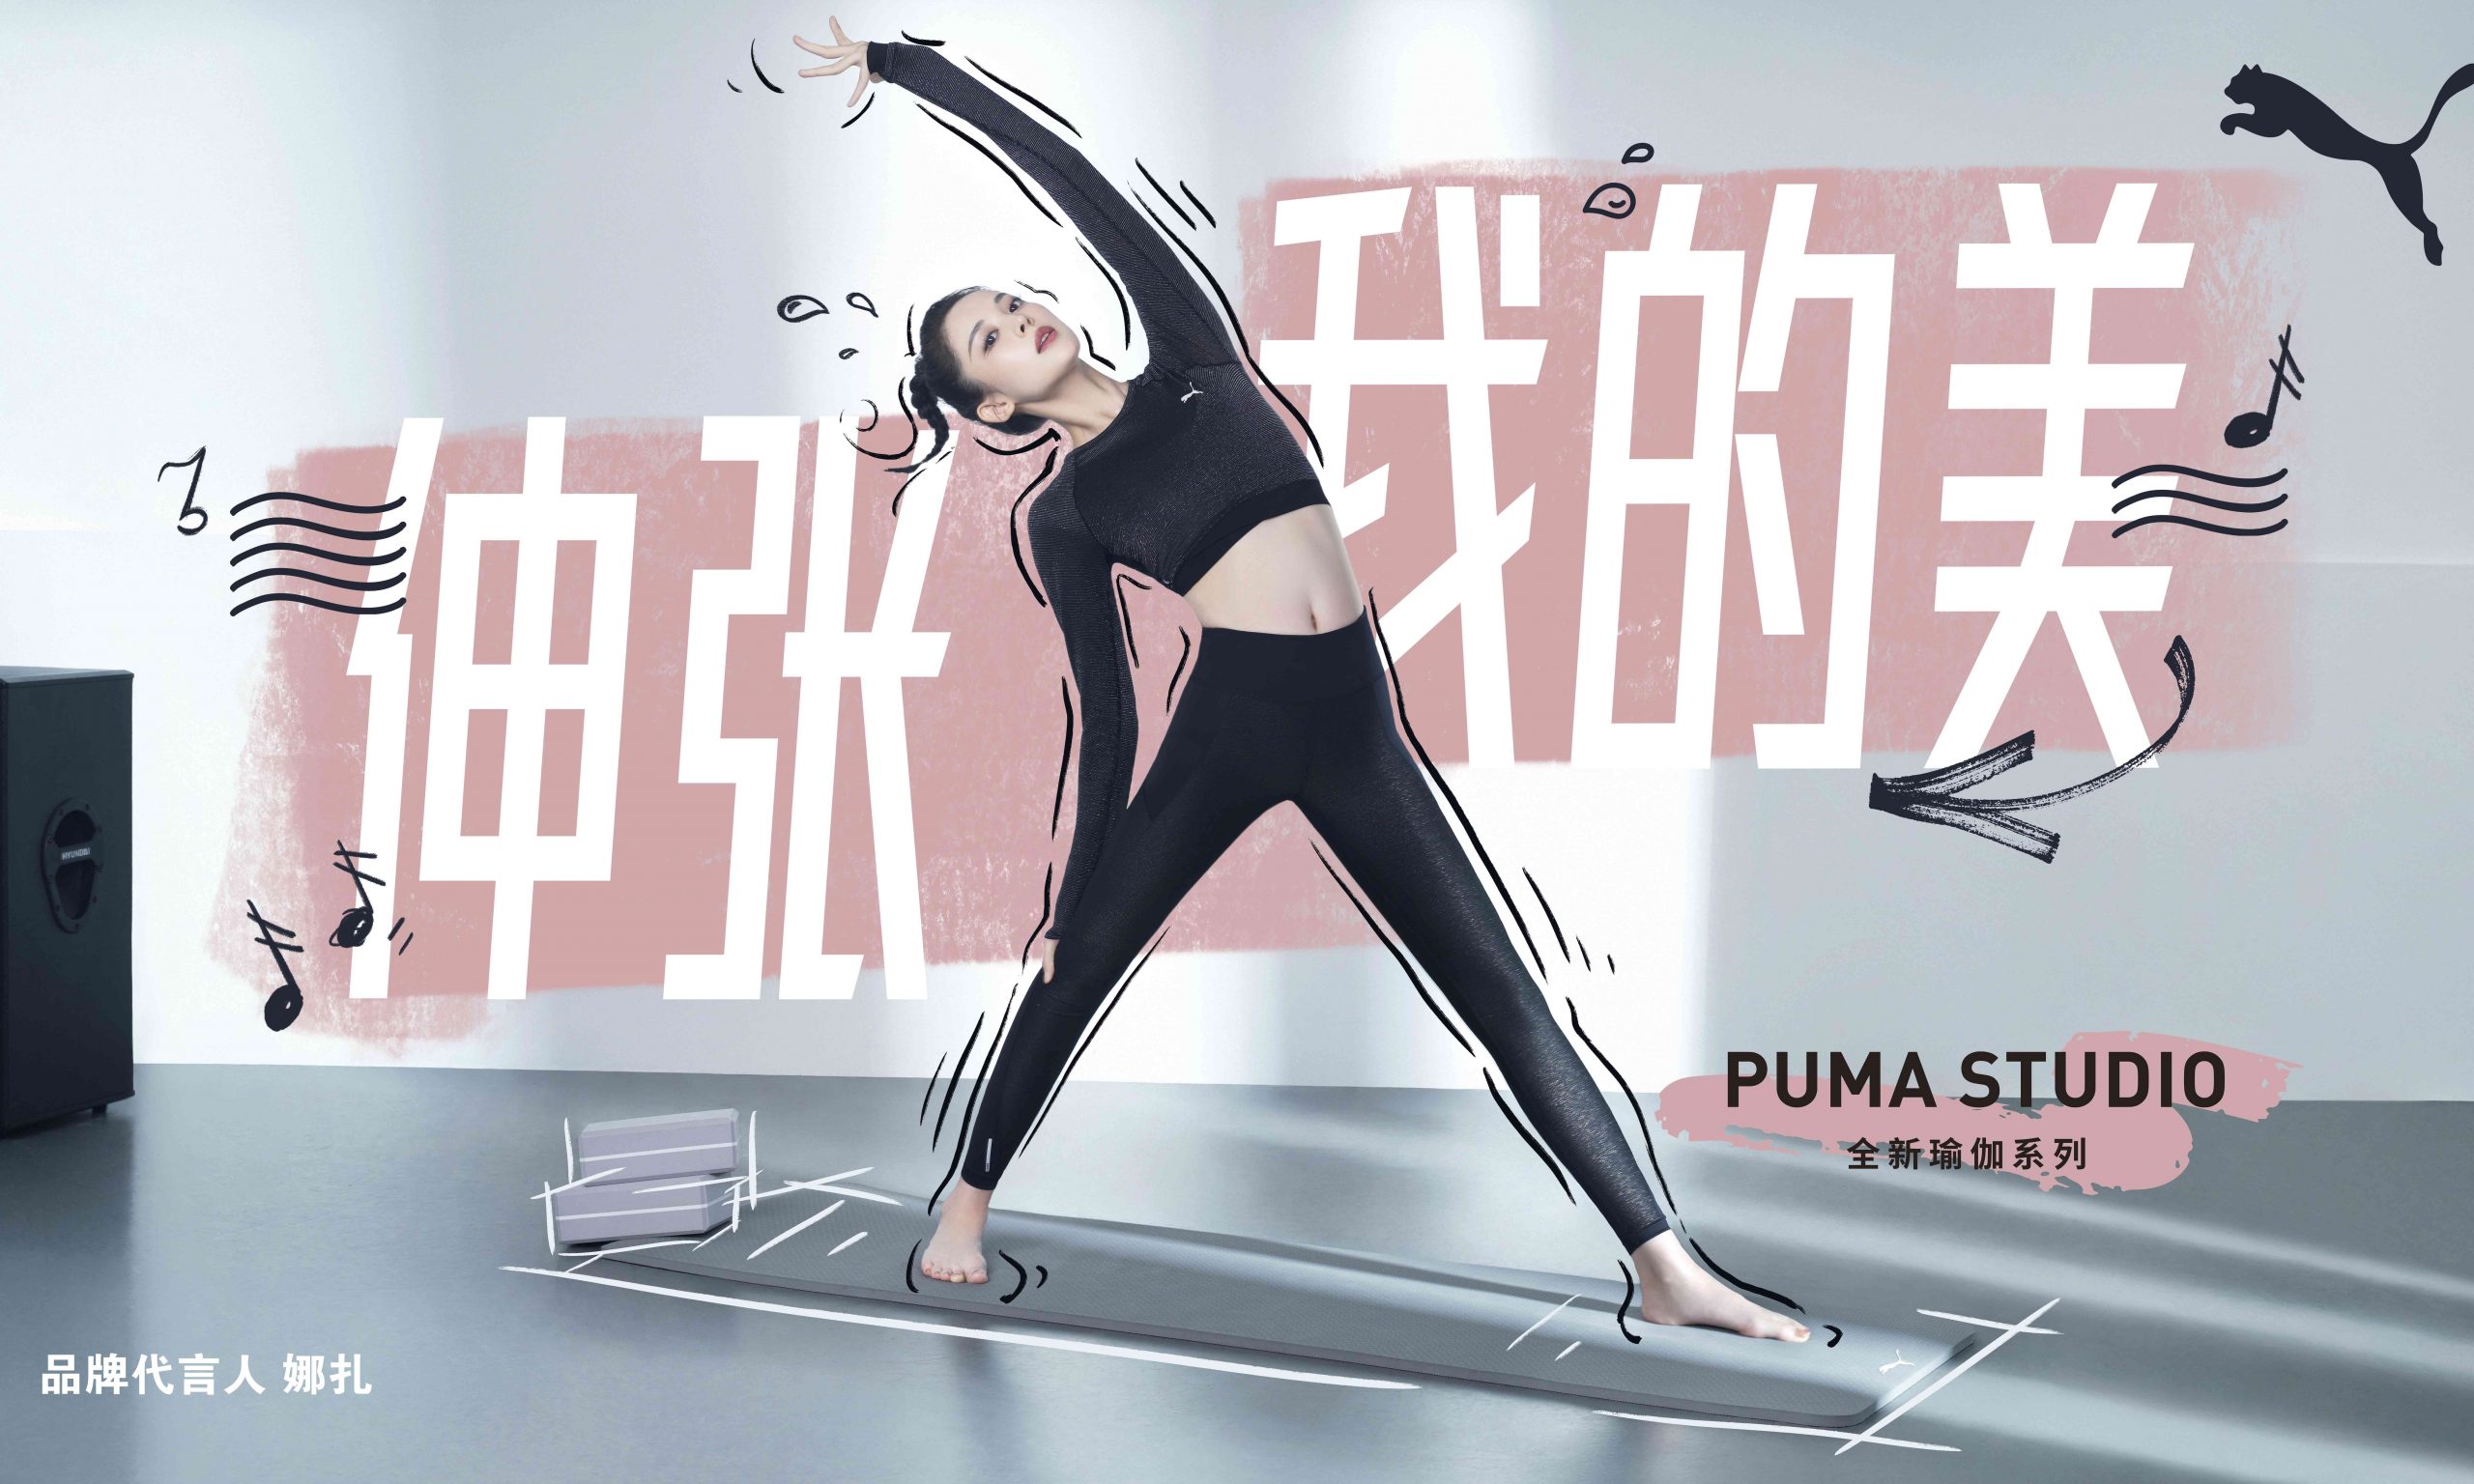 PUMA 推出全新 PUMA STUDIO 瑜伽系列产品